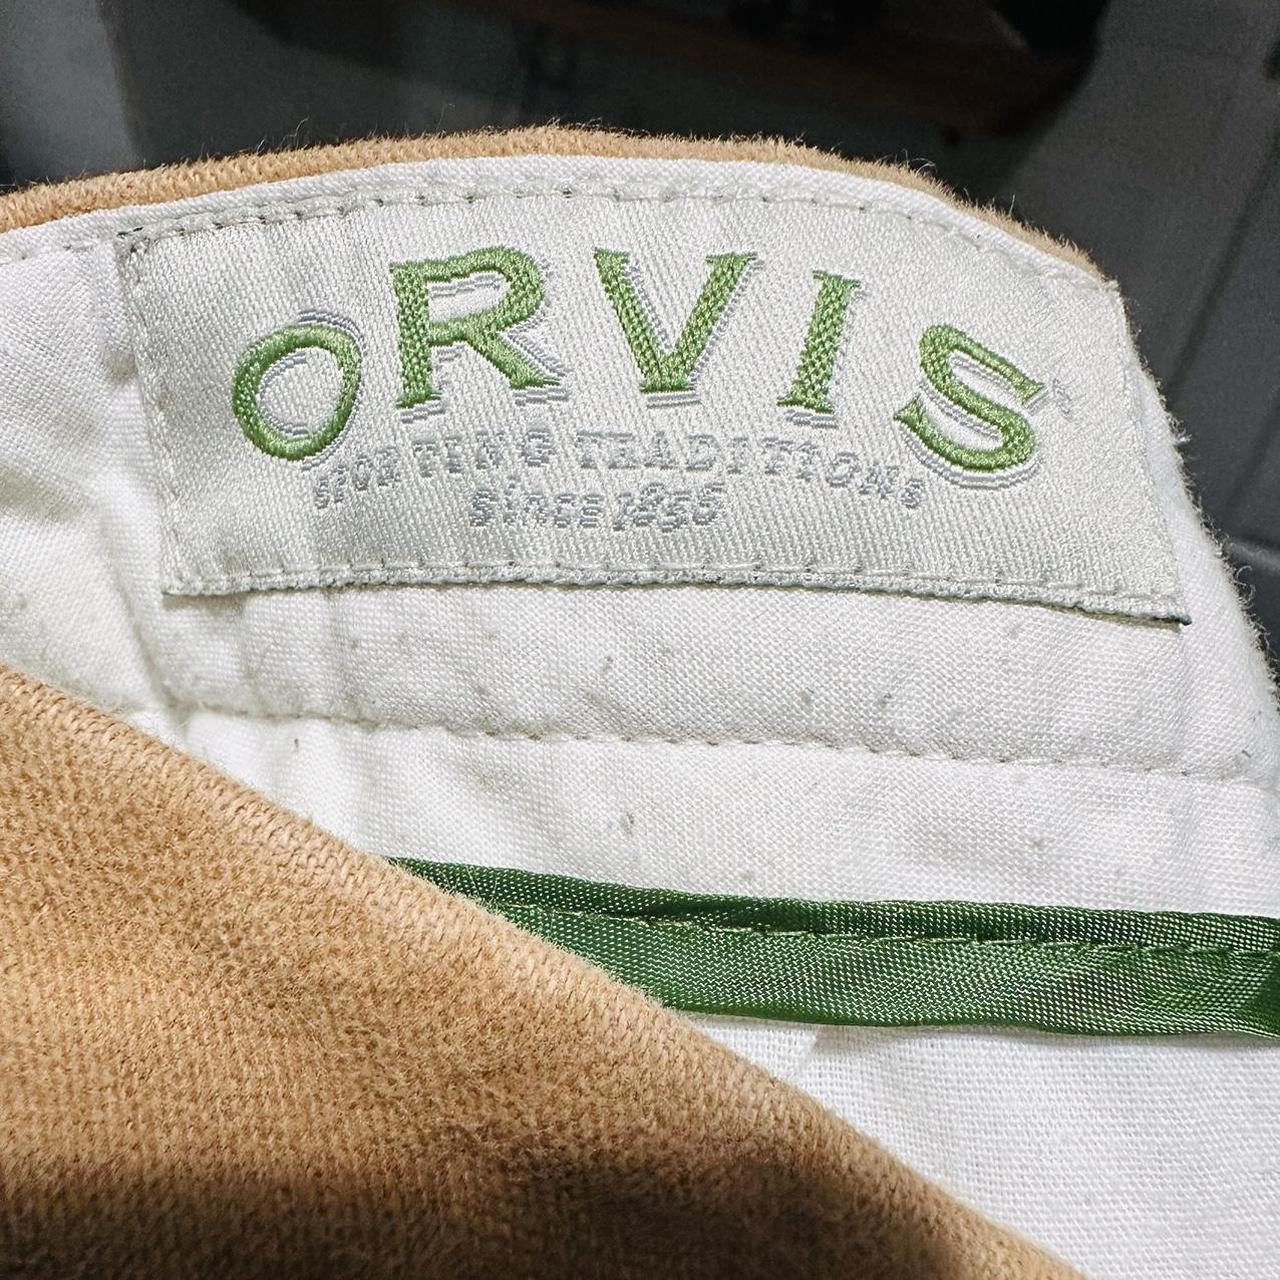 Orvis heavyweight pants, excellent condition. Size - Depop